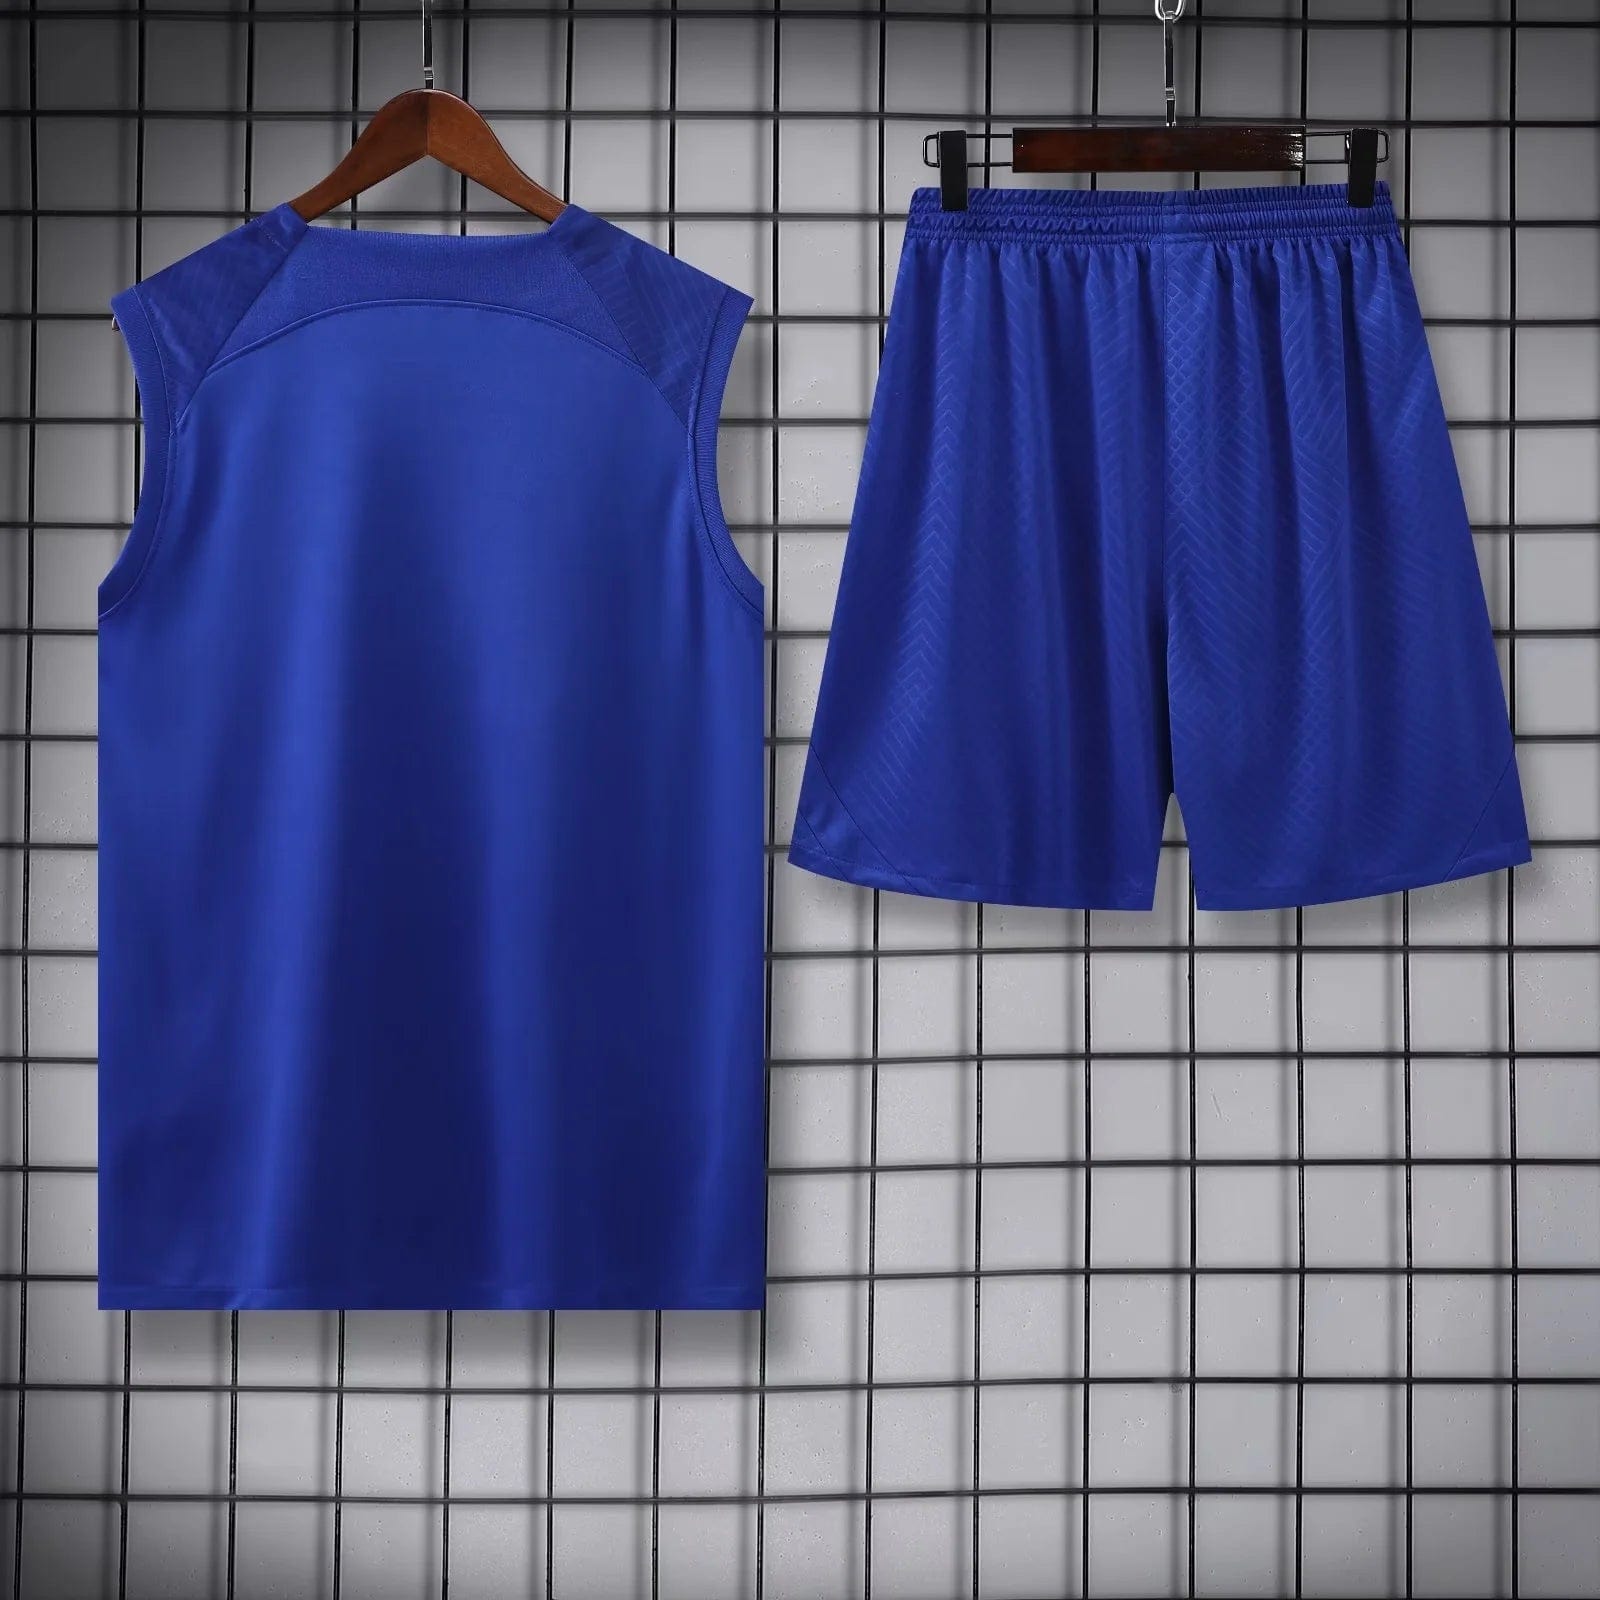 FC Barcelona Sleeveless Training Kit 23/24 - Blue